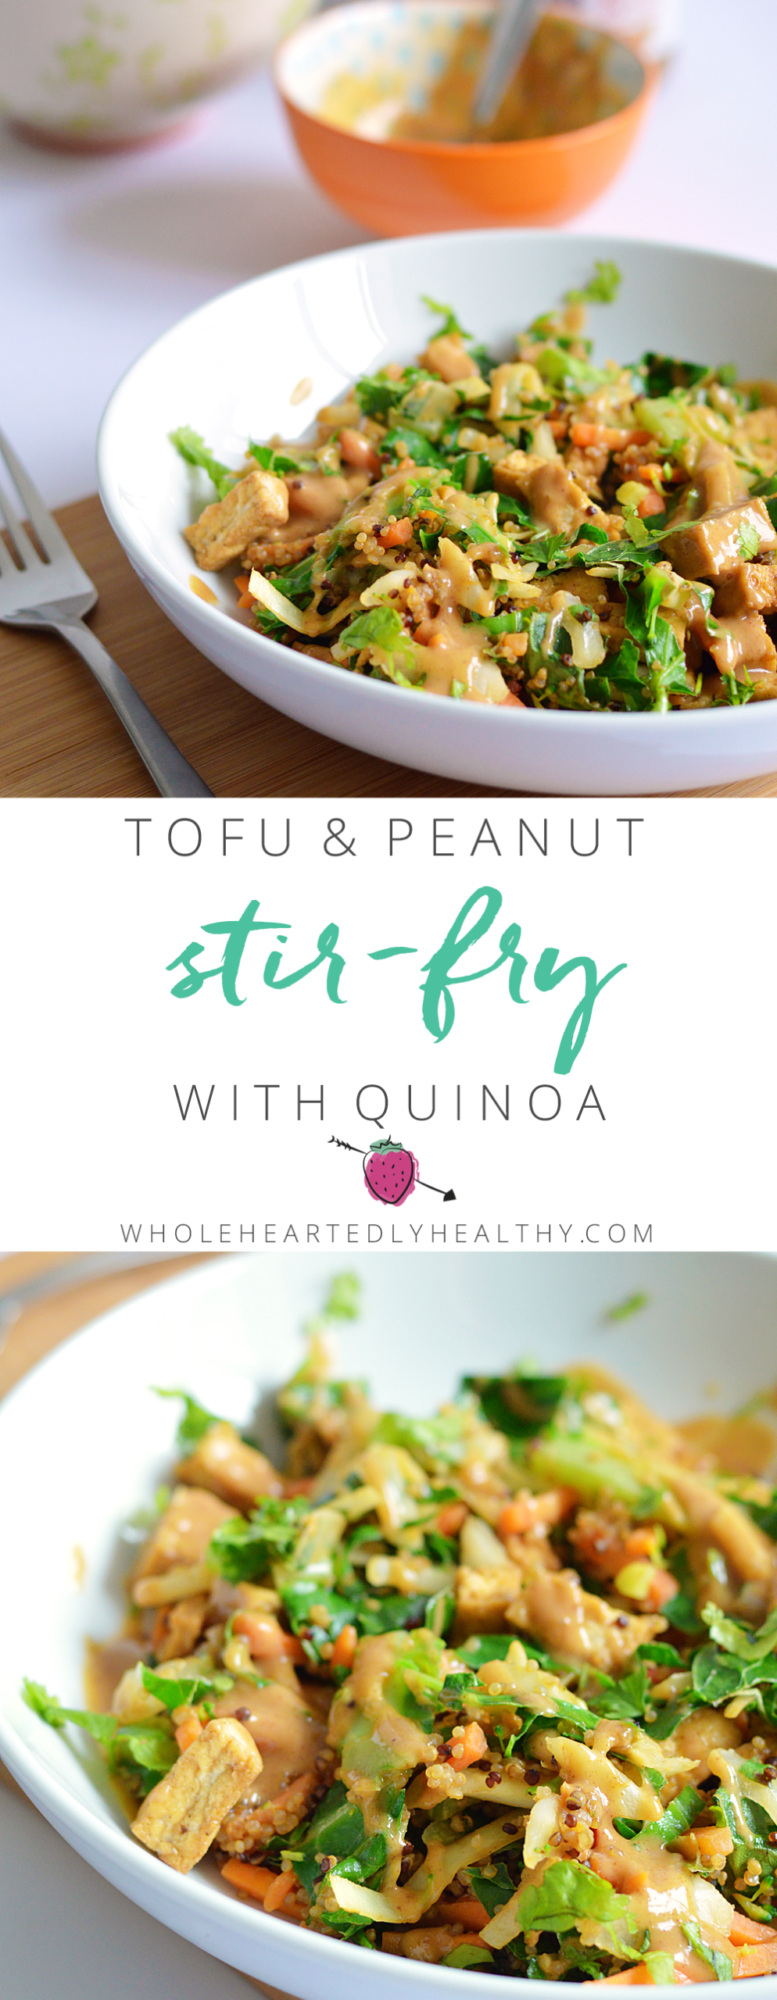 Tofu and peanut stir fry